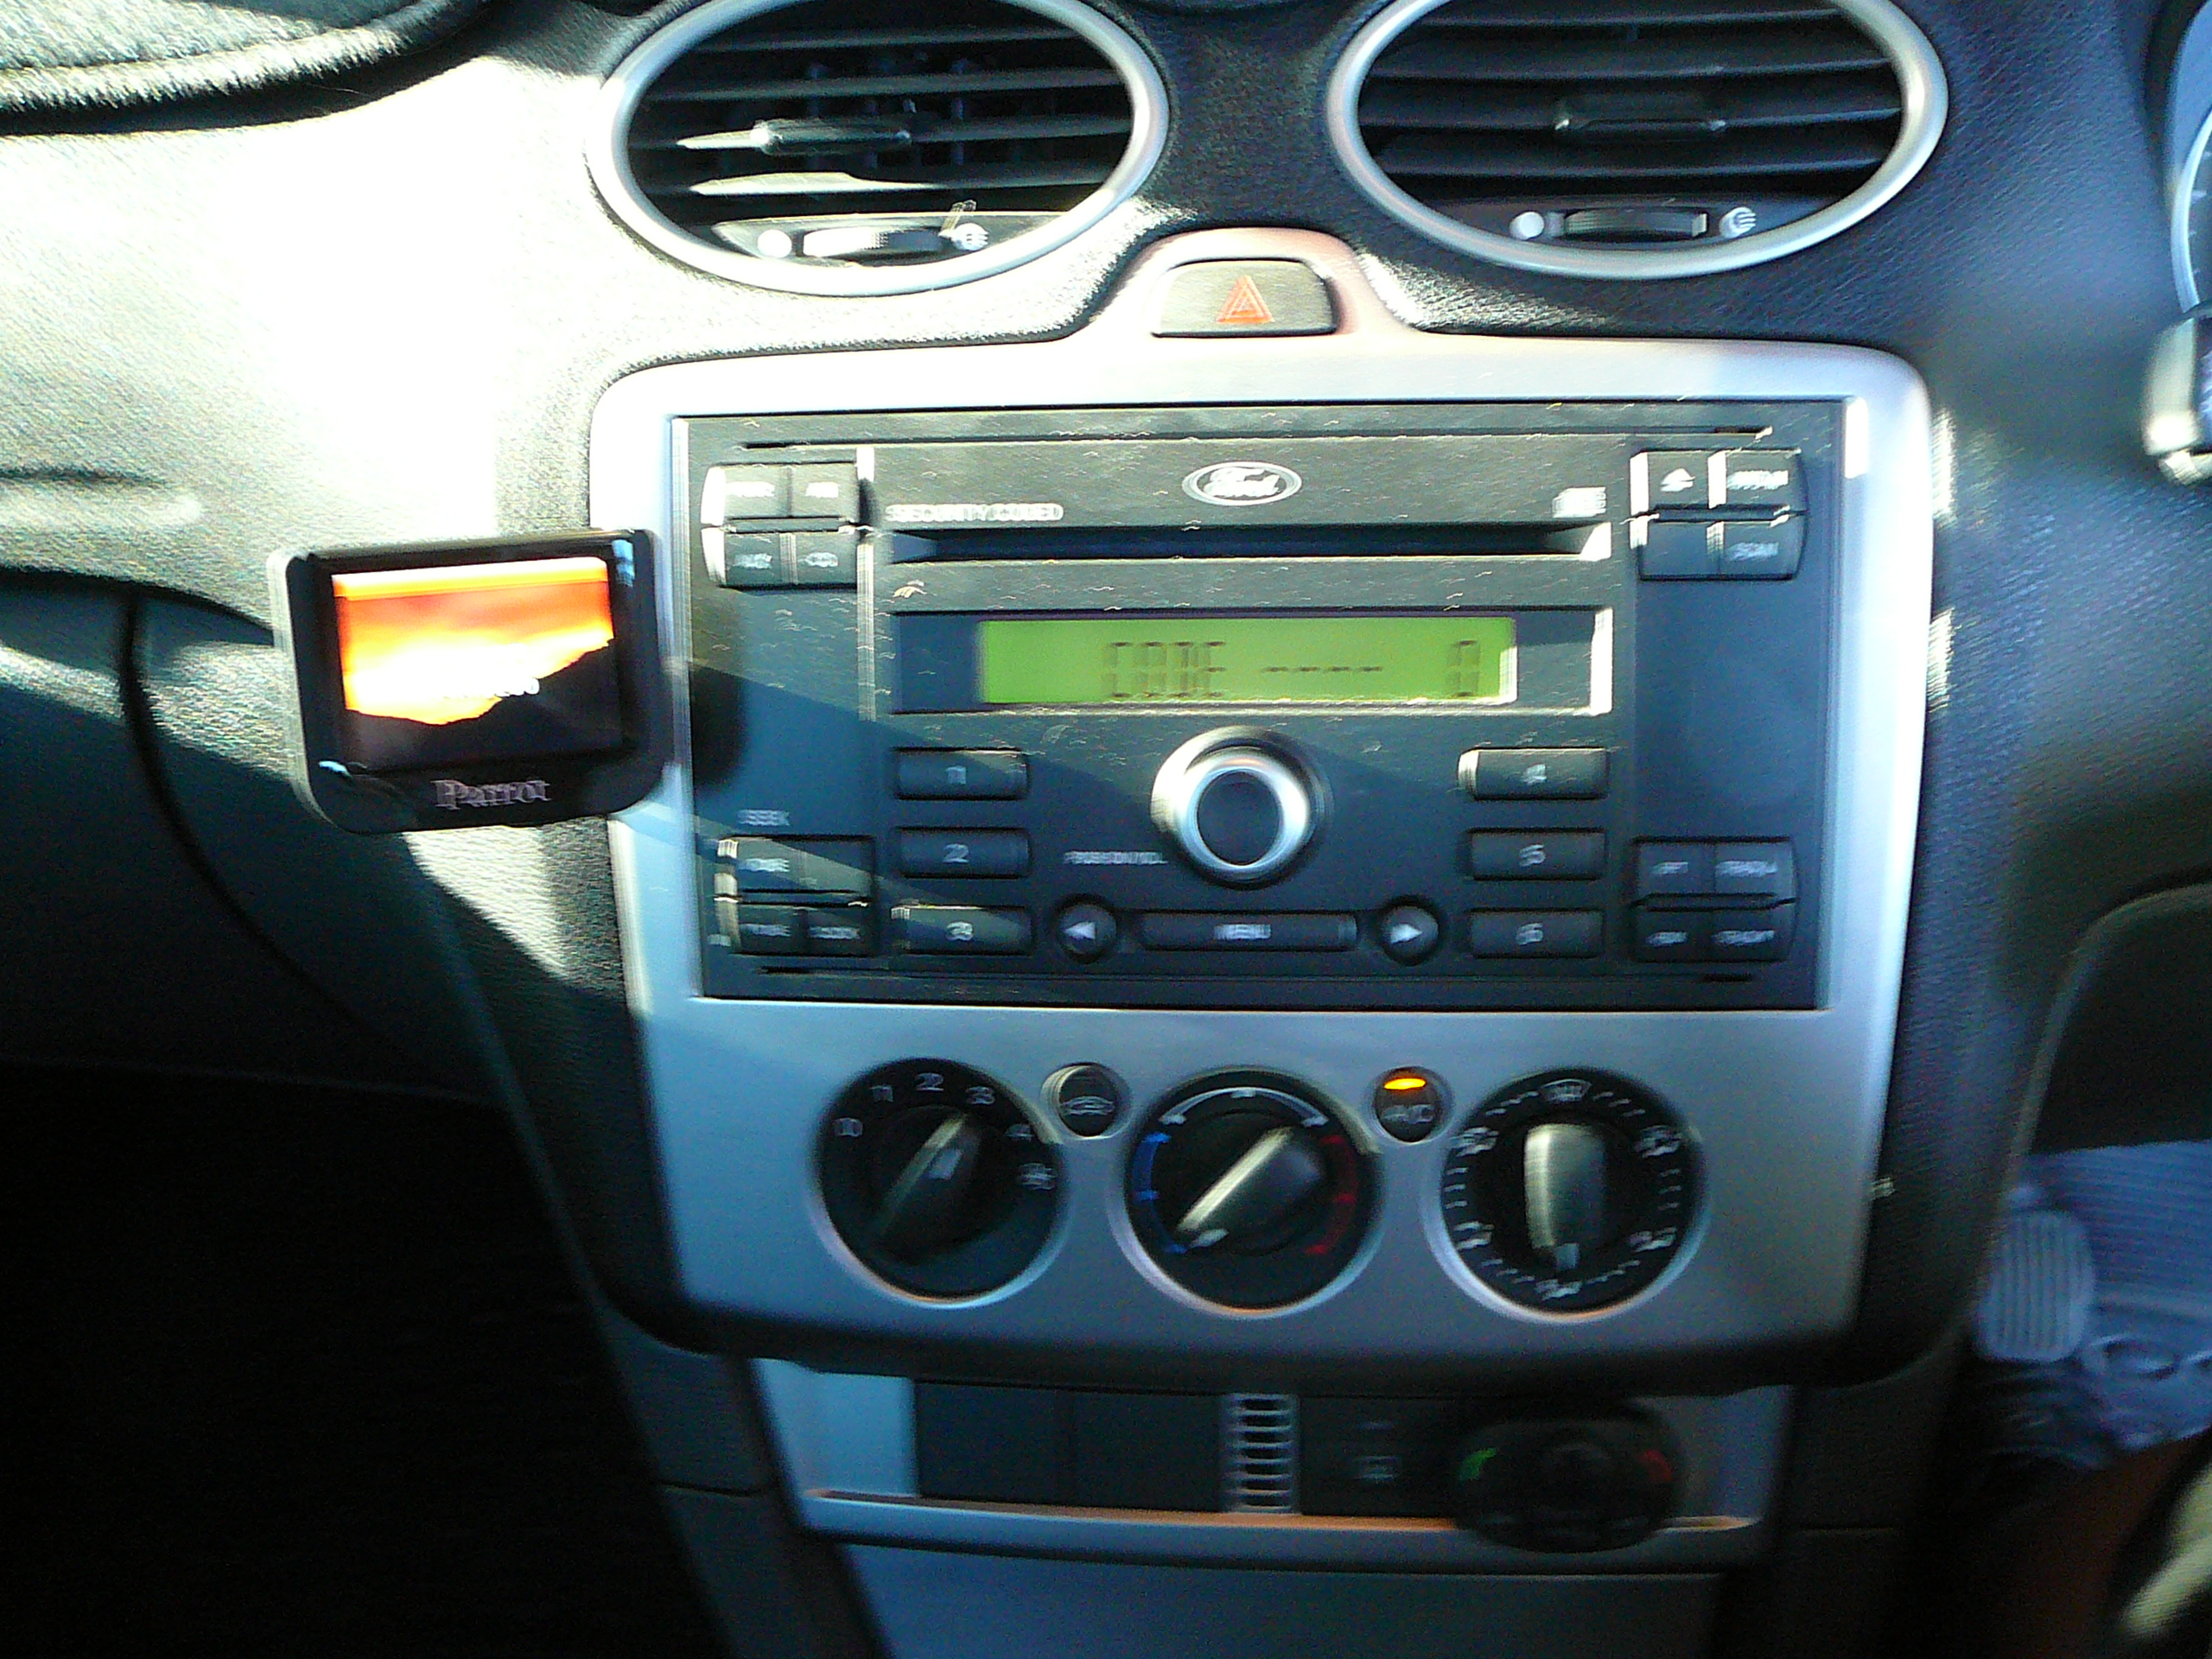 Ford Focus 2008, Parrot MKI 9200 Phone Kit Installation